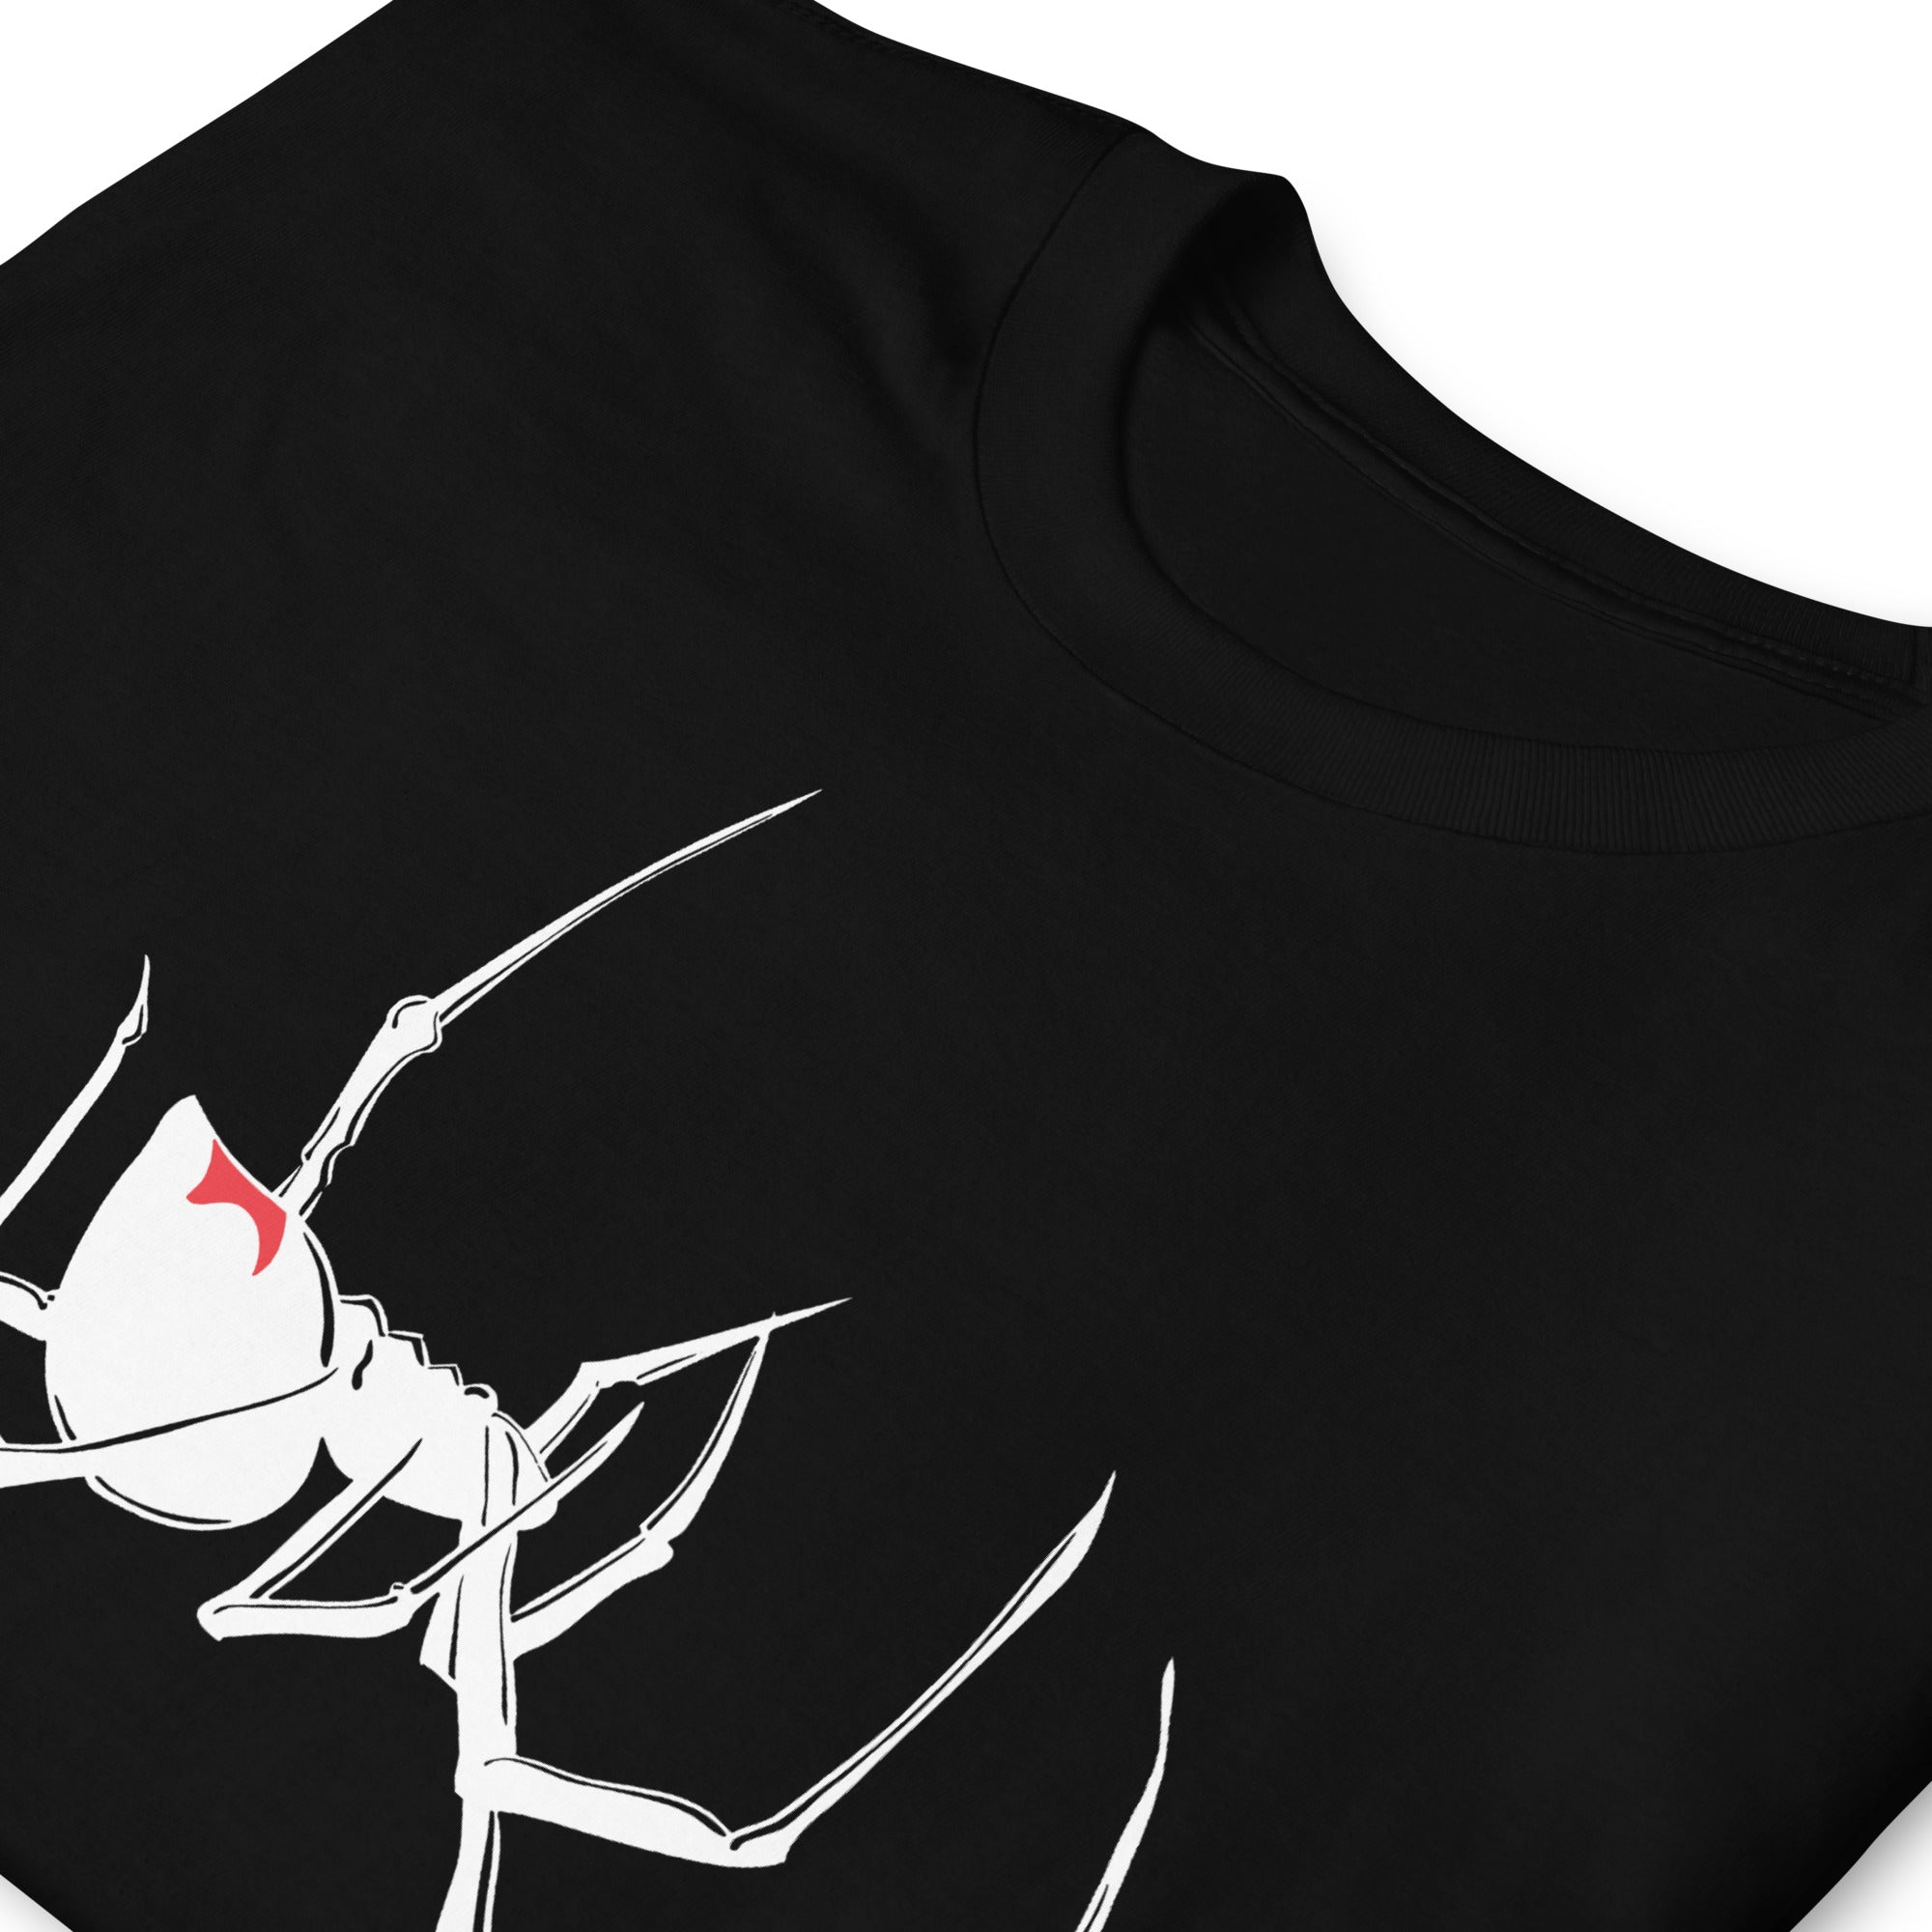 Latrodectus Black Widow Spider Arachnid Men's Short-Sleeve T-Shirt - Edge of Life Designs